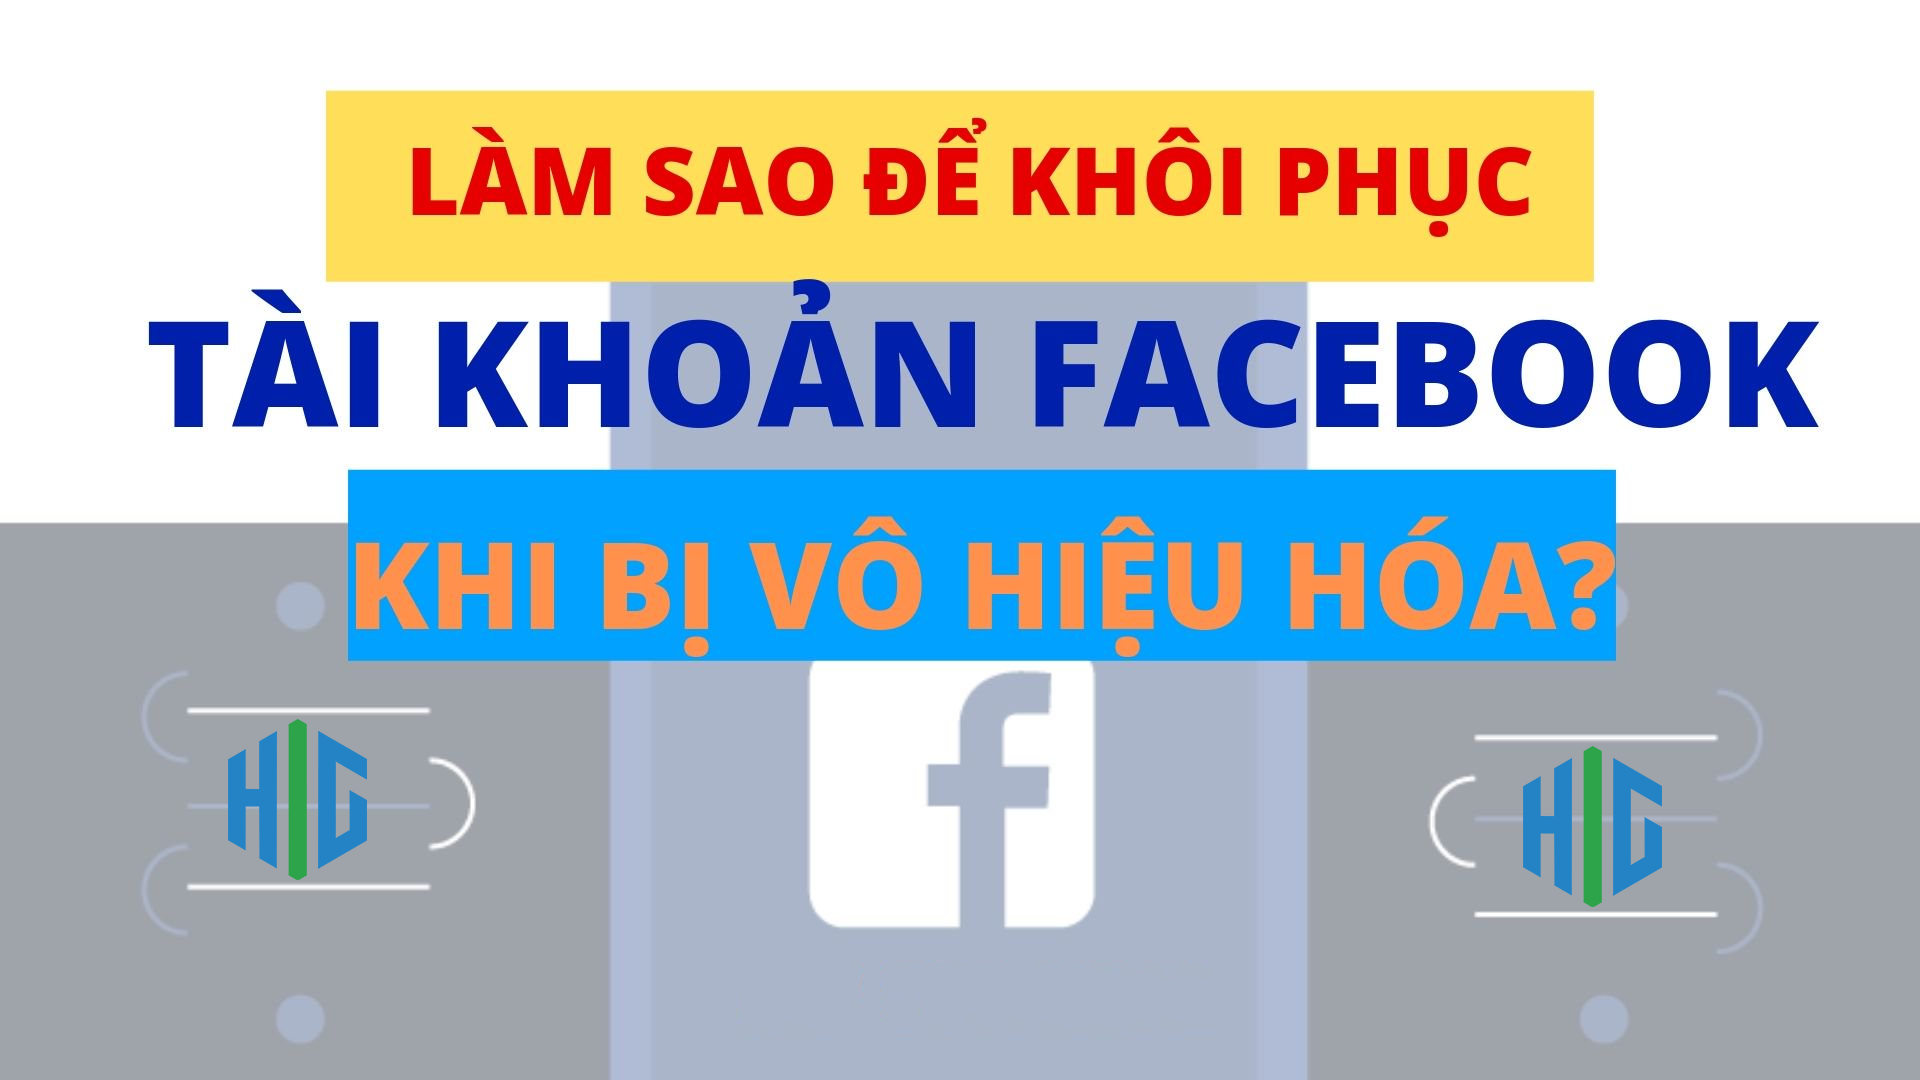 /data/images/upload/NewsImg/19092322_khoi-phuc-tai-khoan-facebook-bi-vo-hieu-hoa-1.png